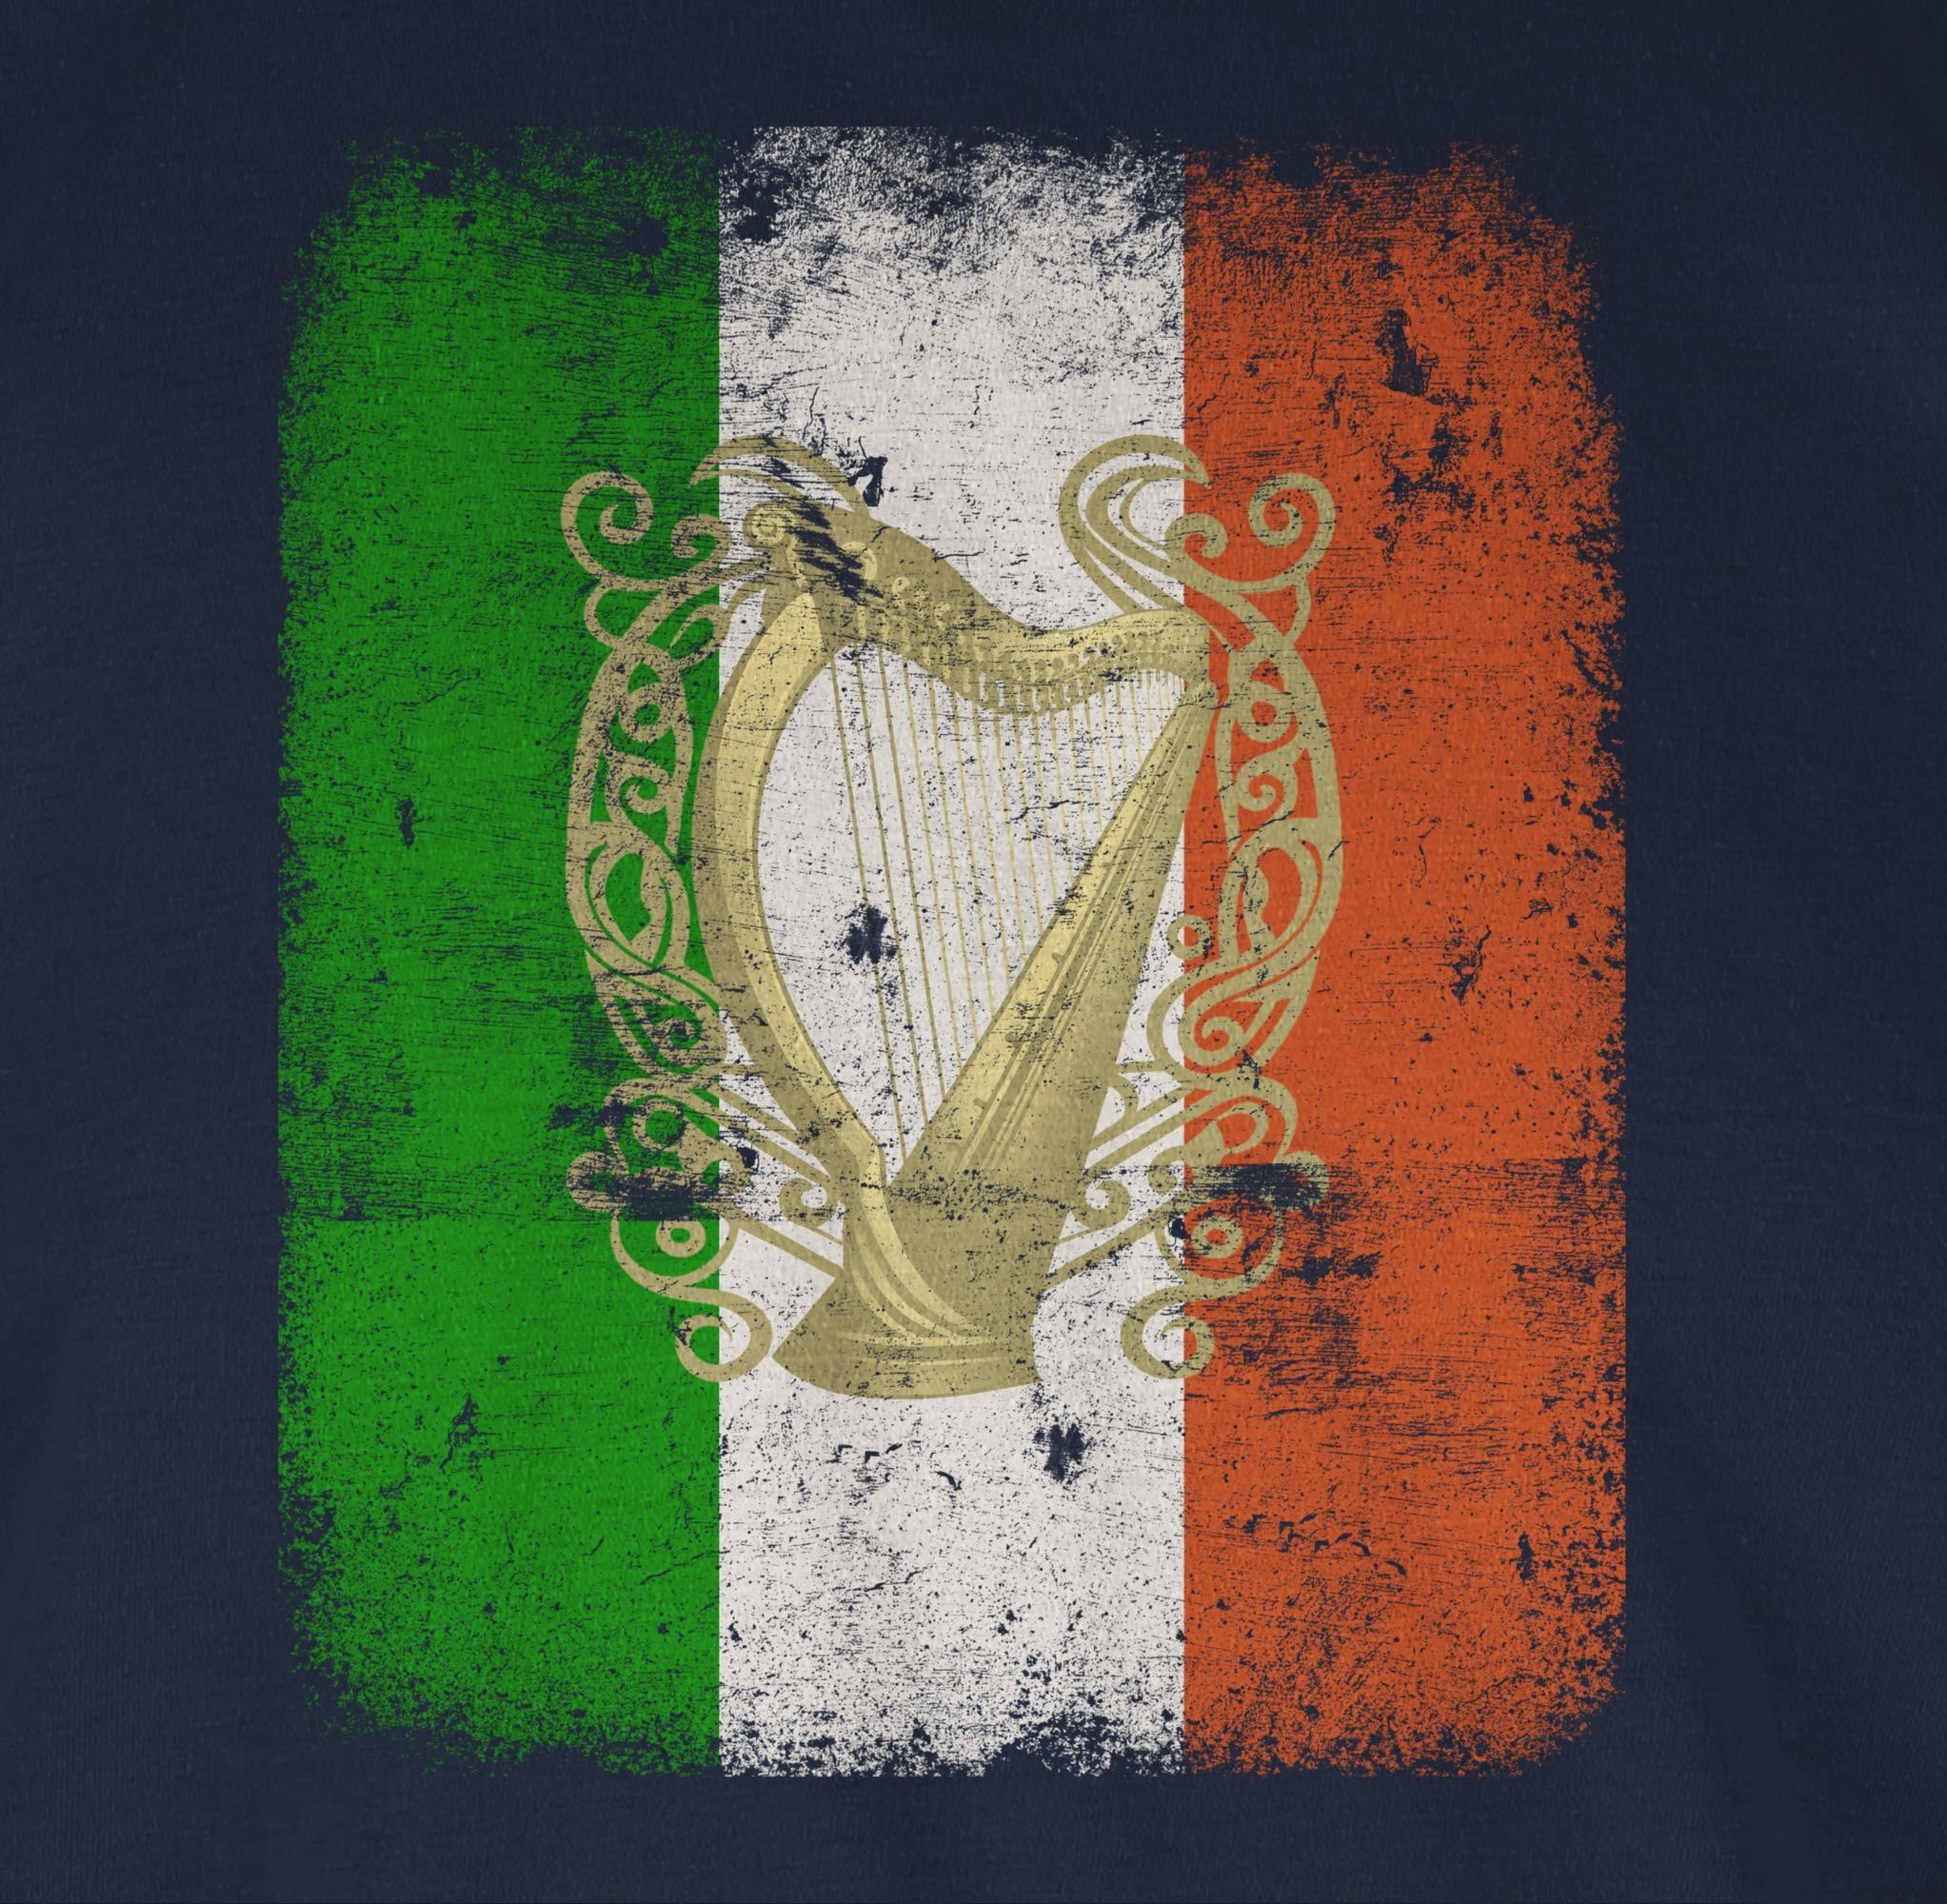 Shirtracer T-Shirt Irland Irish Day Patricks Flag Navy 03 Flagge Irische Blau St